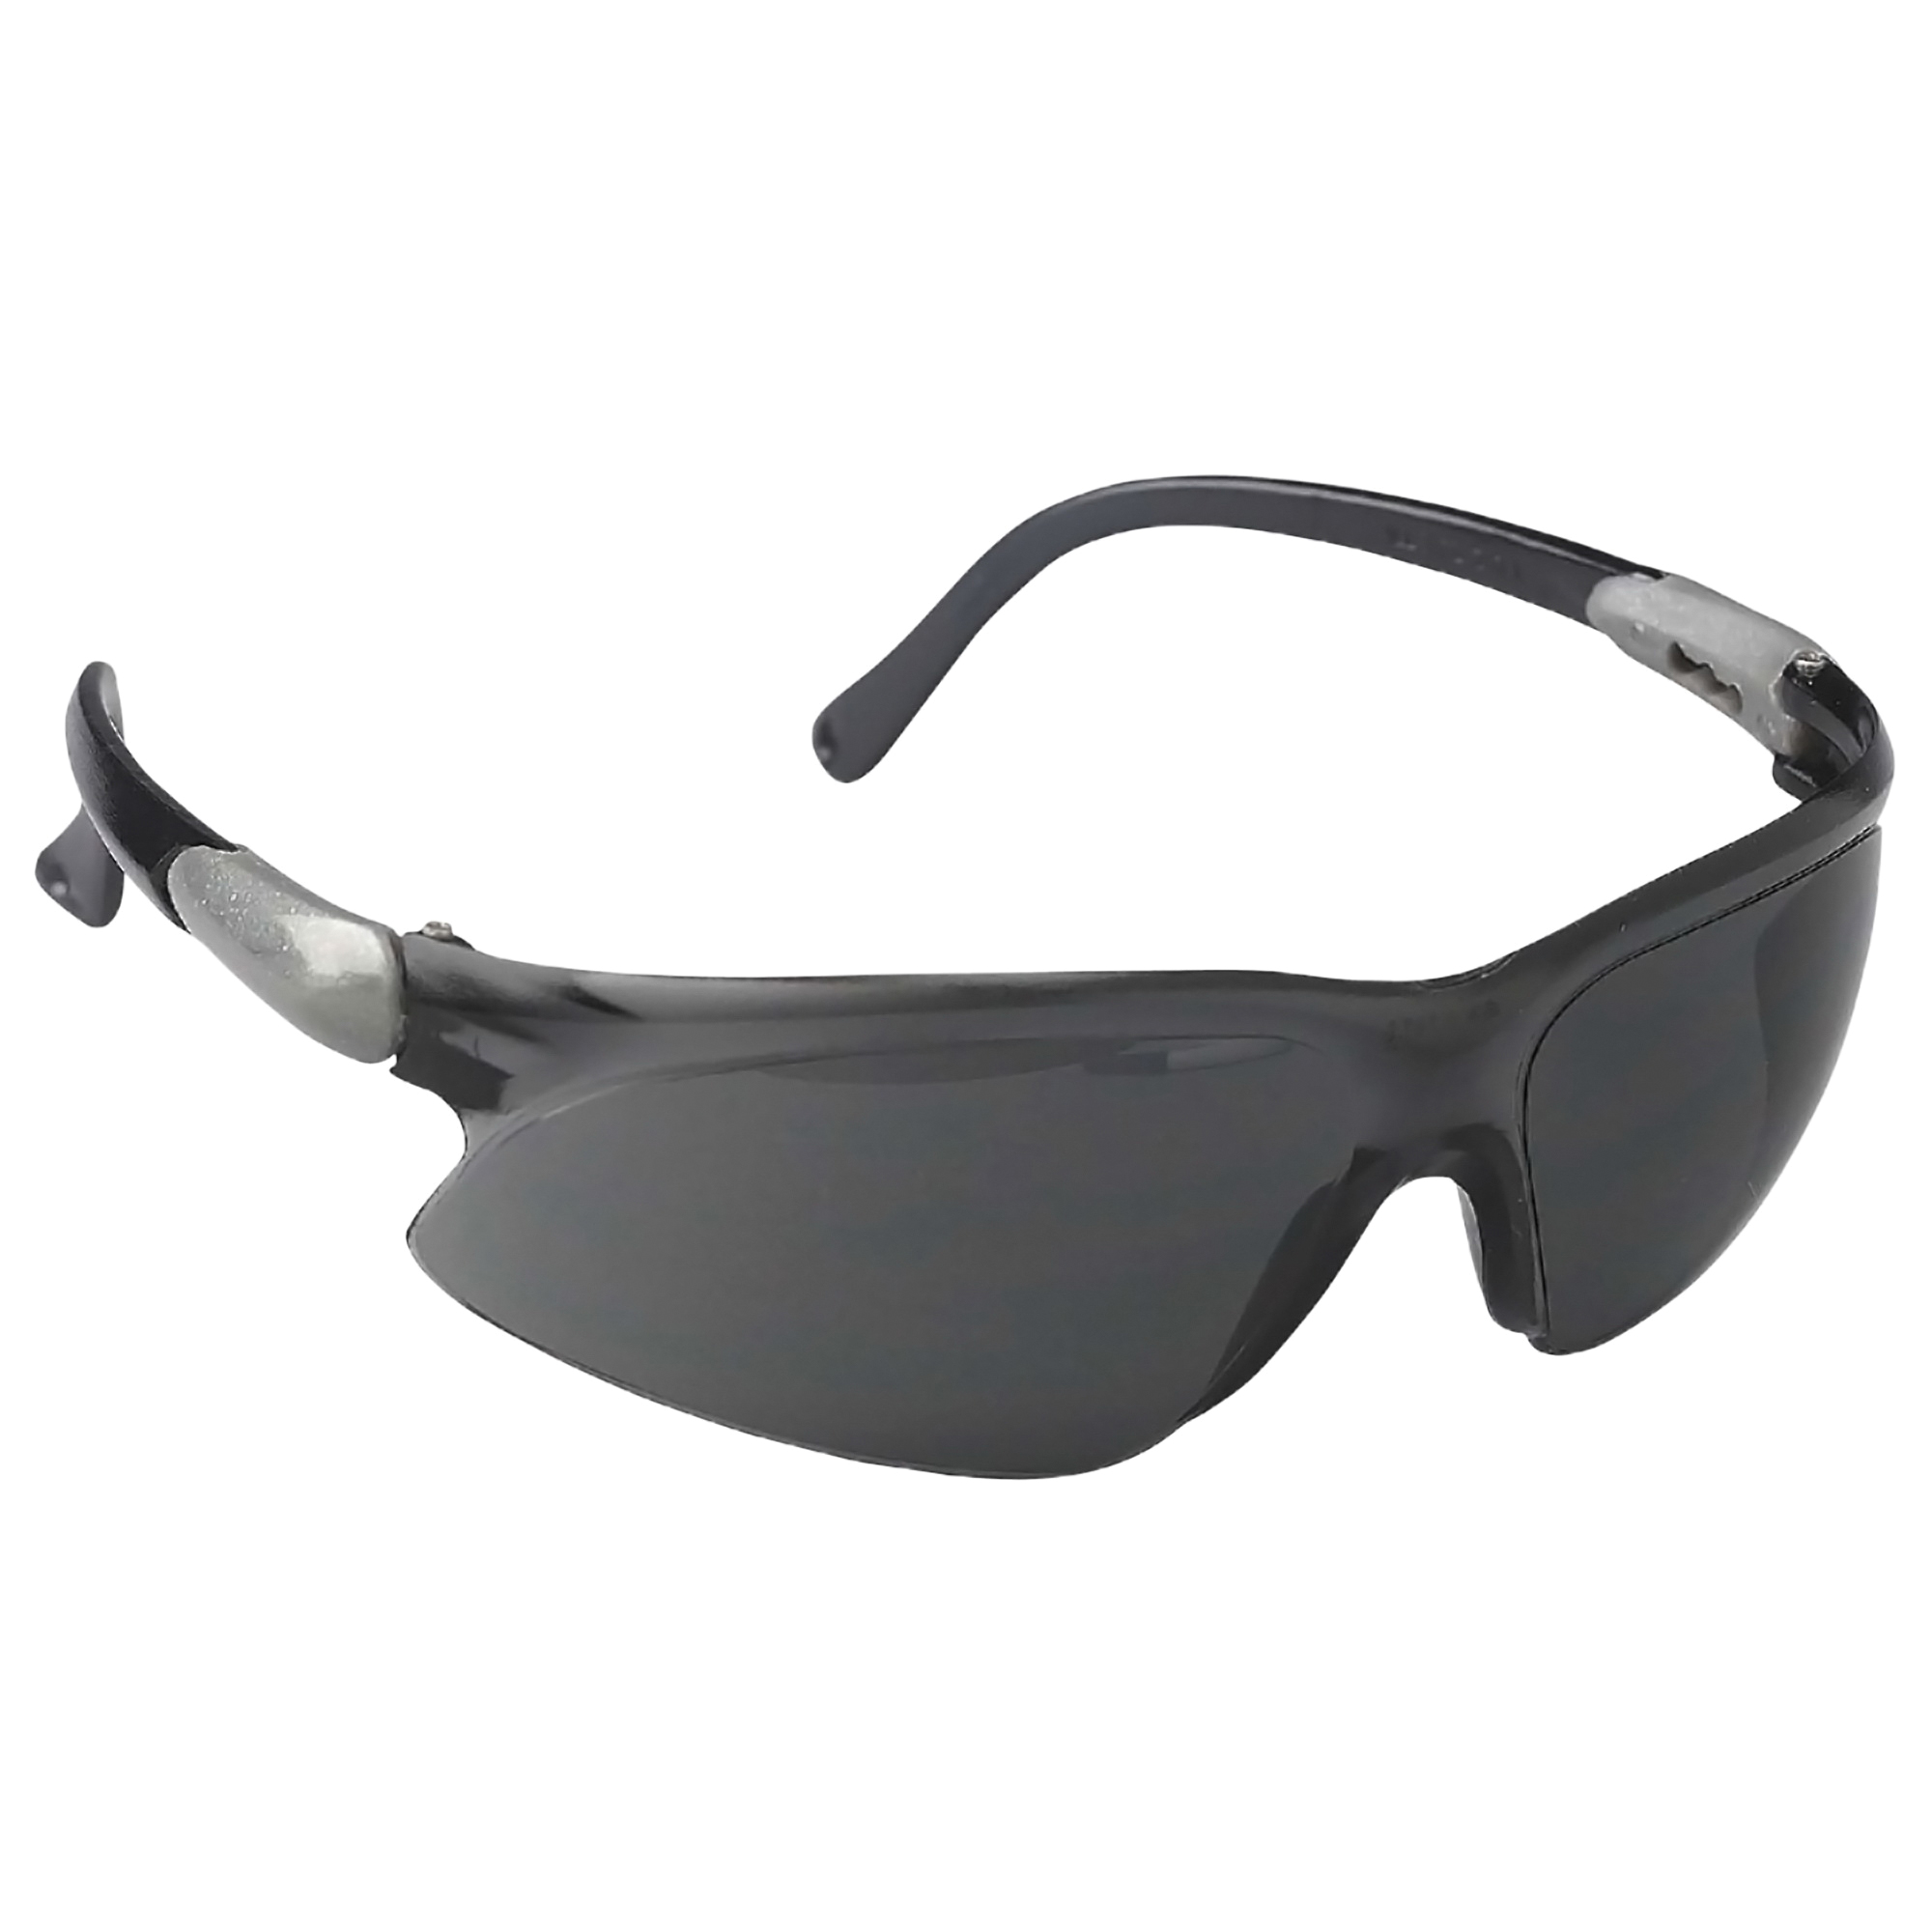 Crossfire Shield Blue Mirror Foam Padded Safety Glasses Sunglasses Z87+